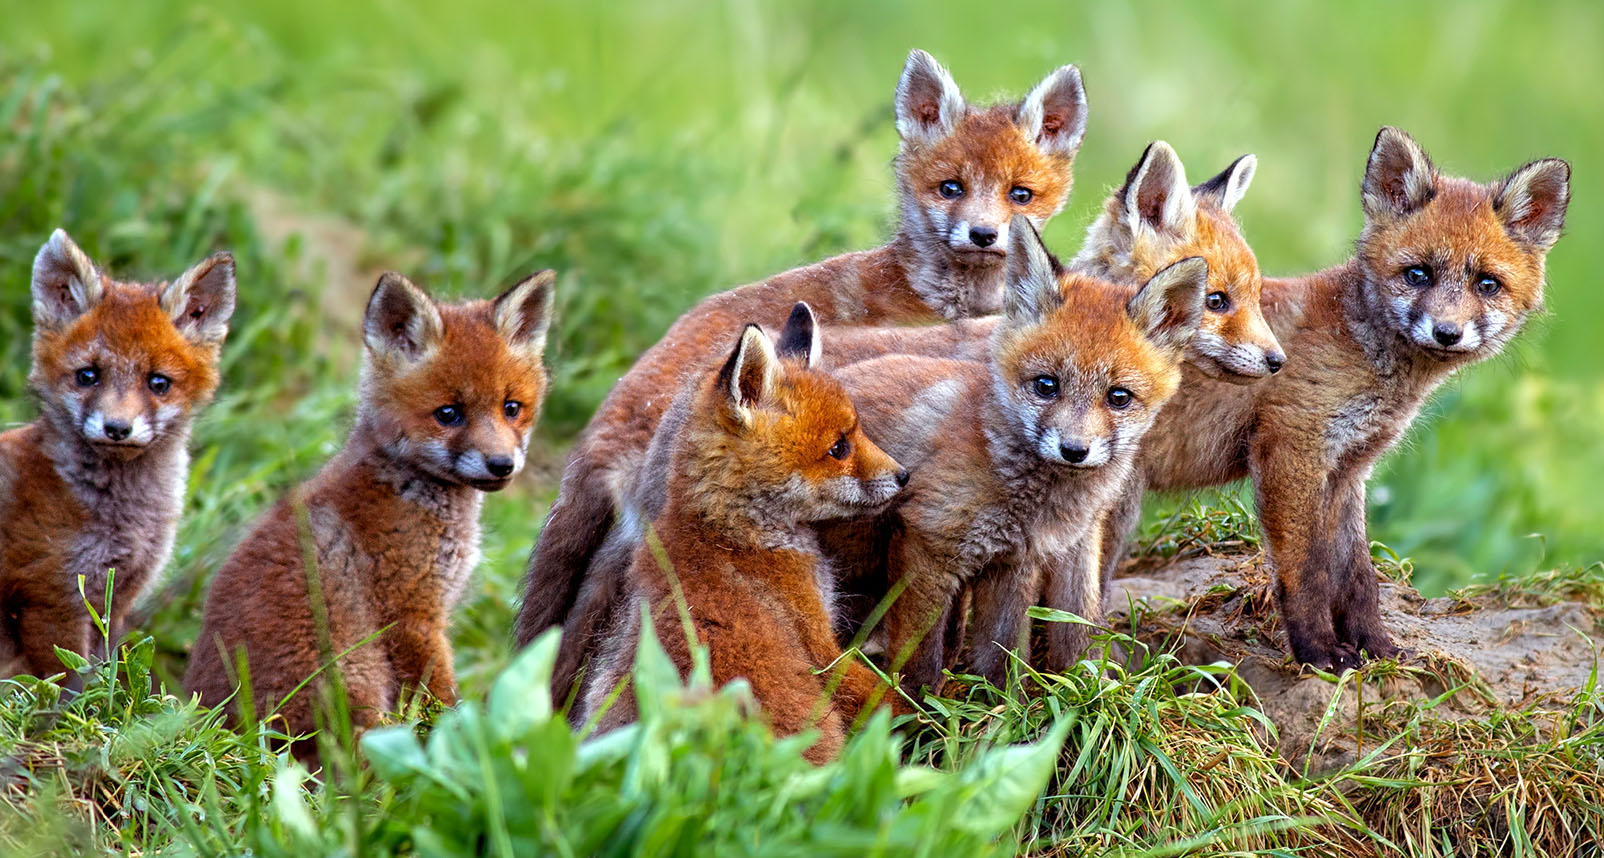 Canada Sibling Red Fox Kits